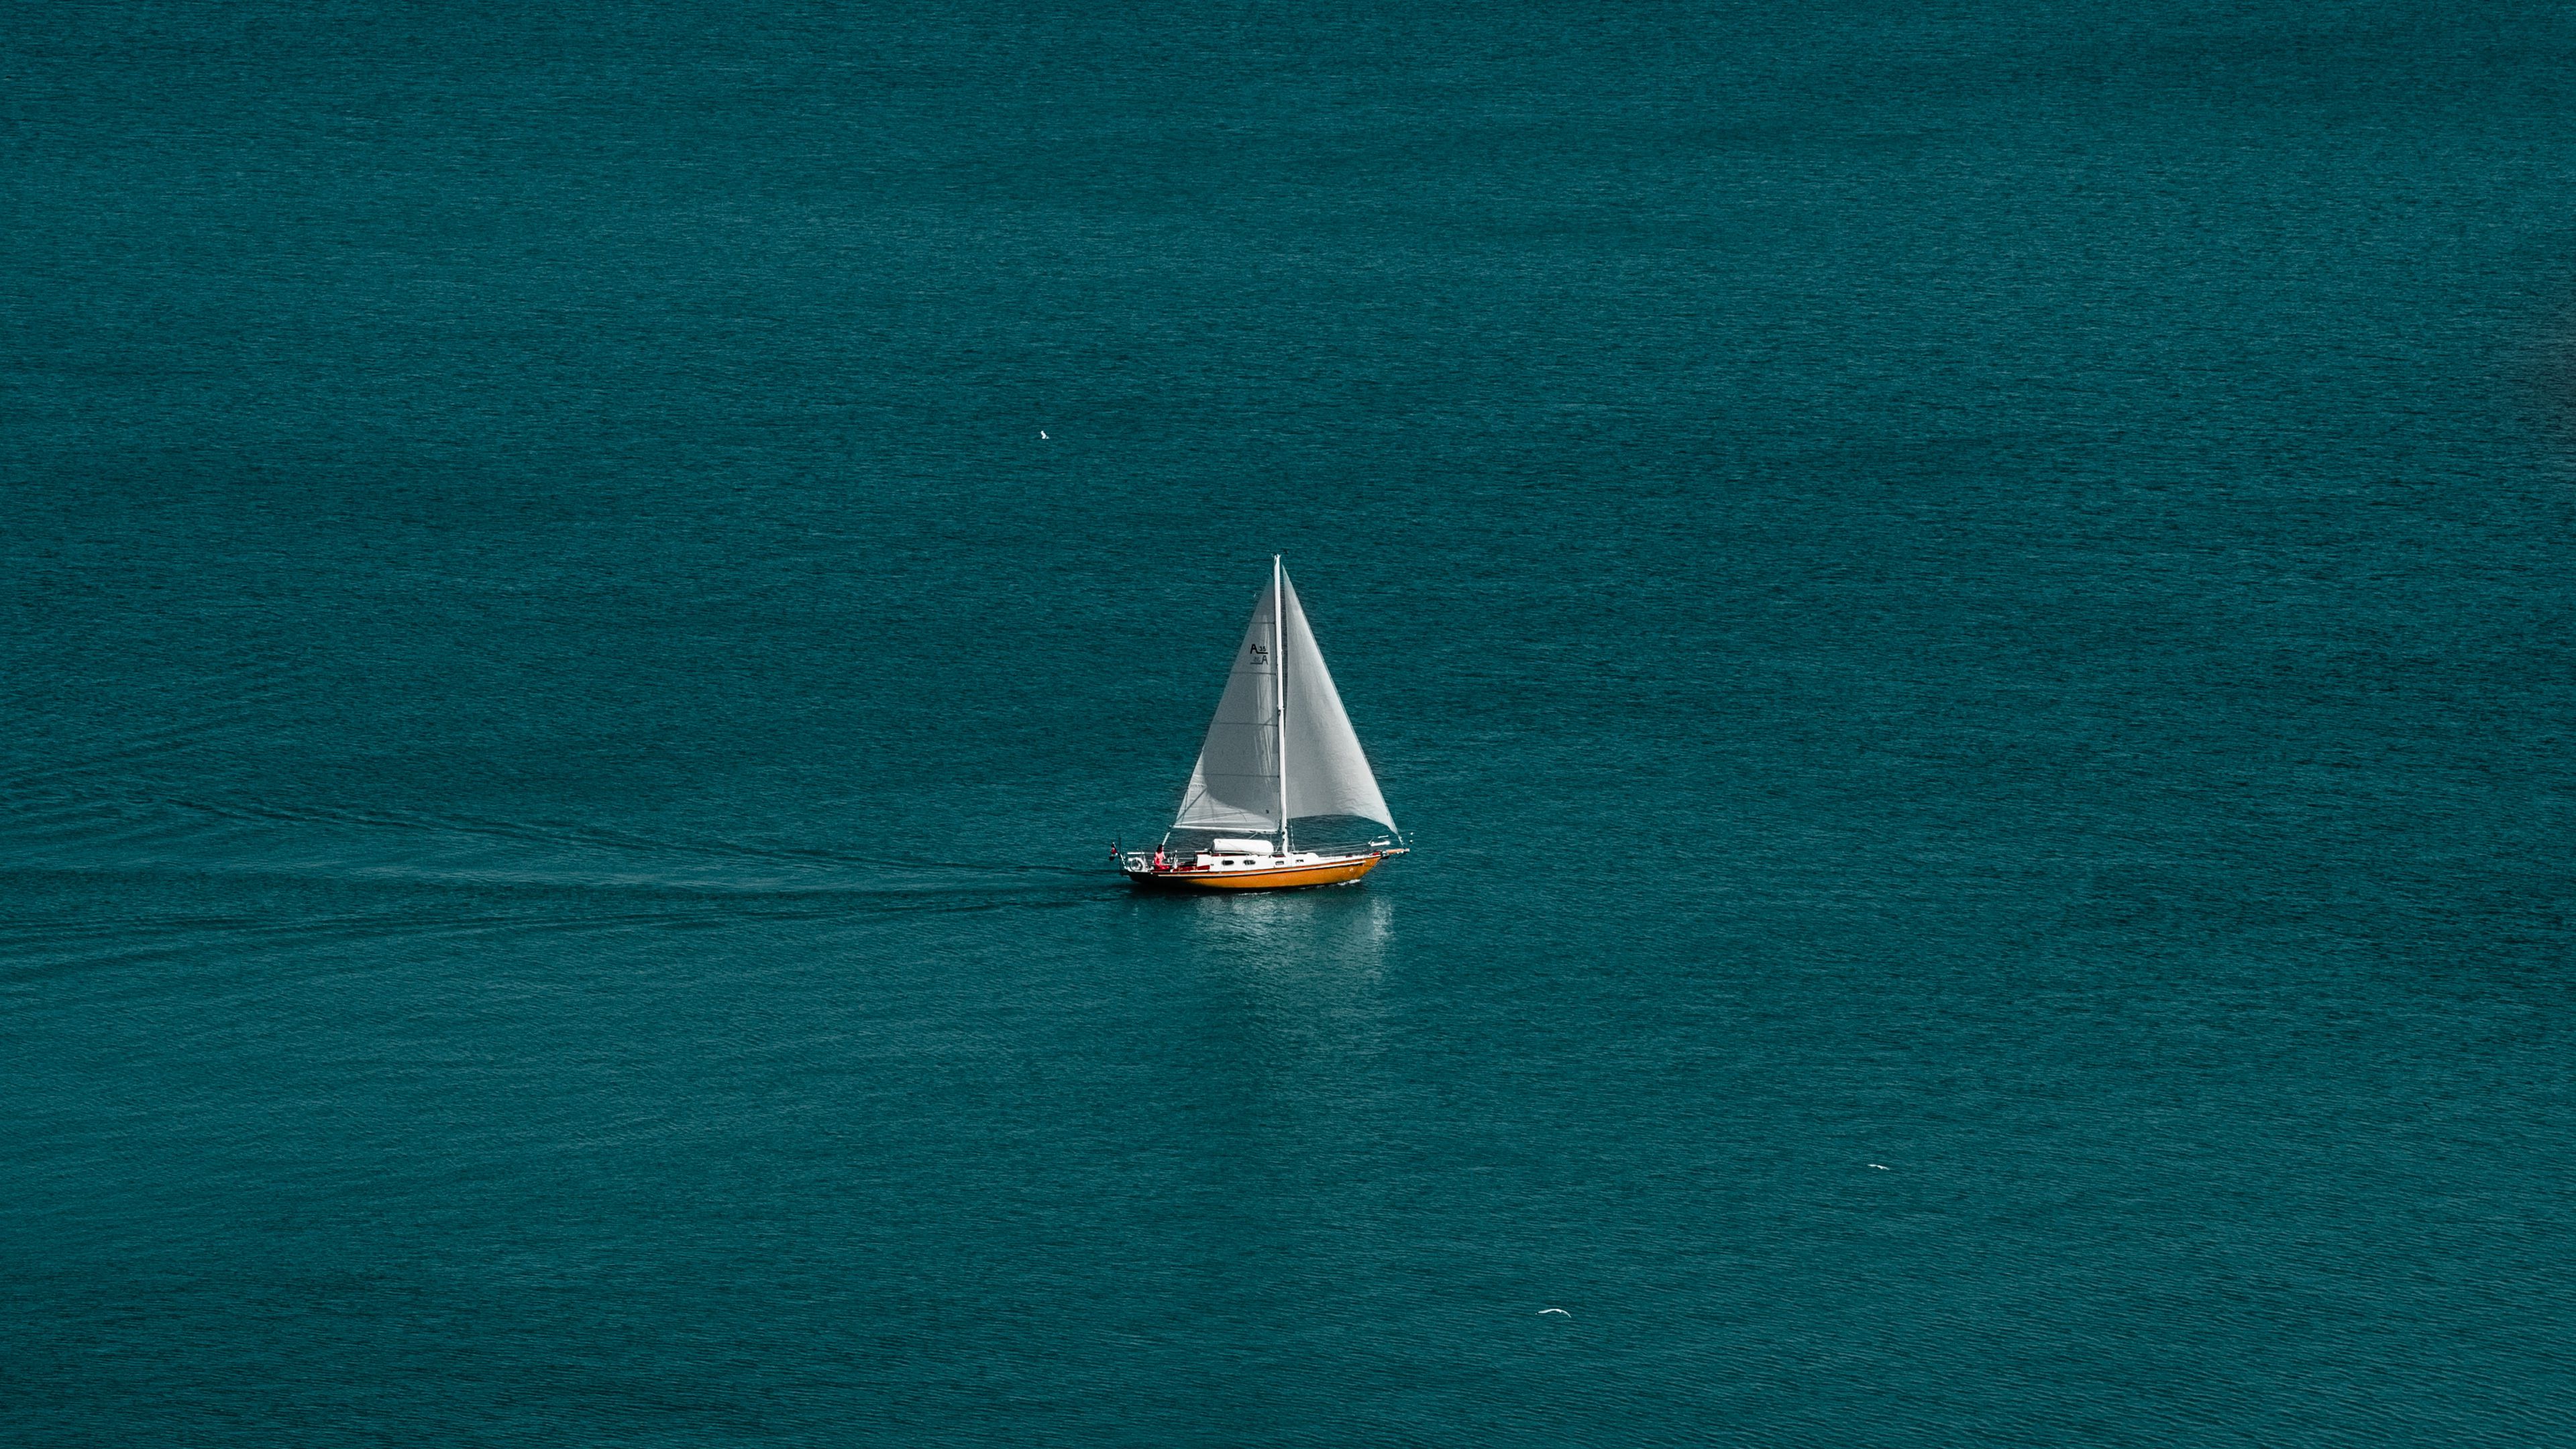 Download wallpaper 3840x2160 sea, boat, sailboat, water, horizon 4k uhd